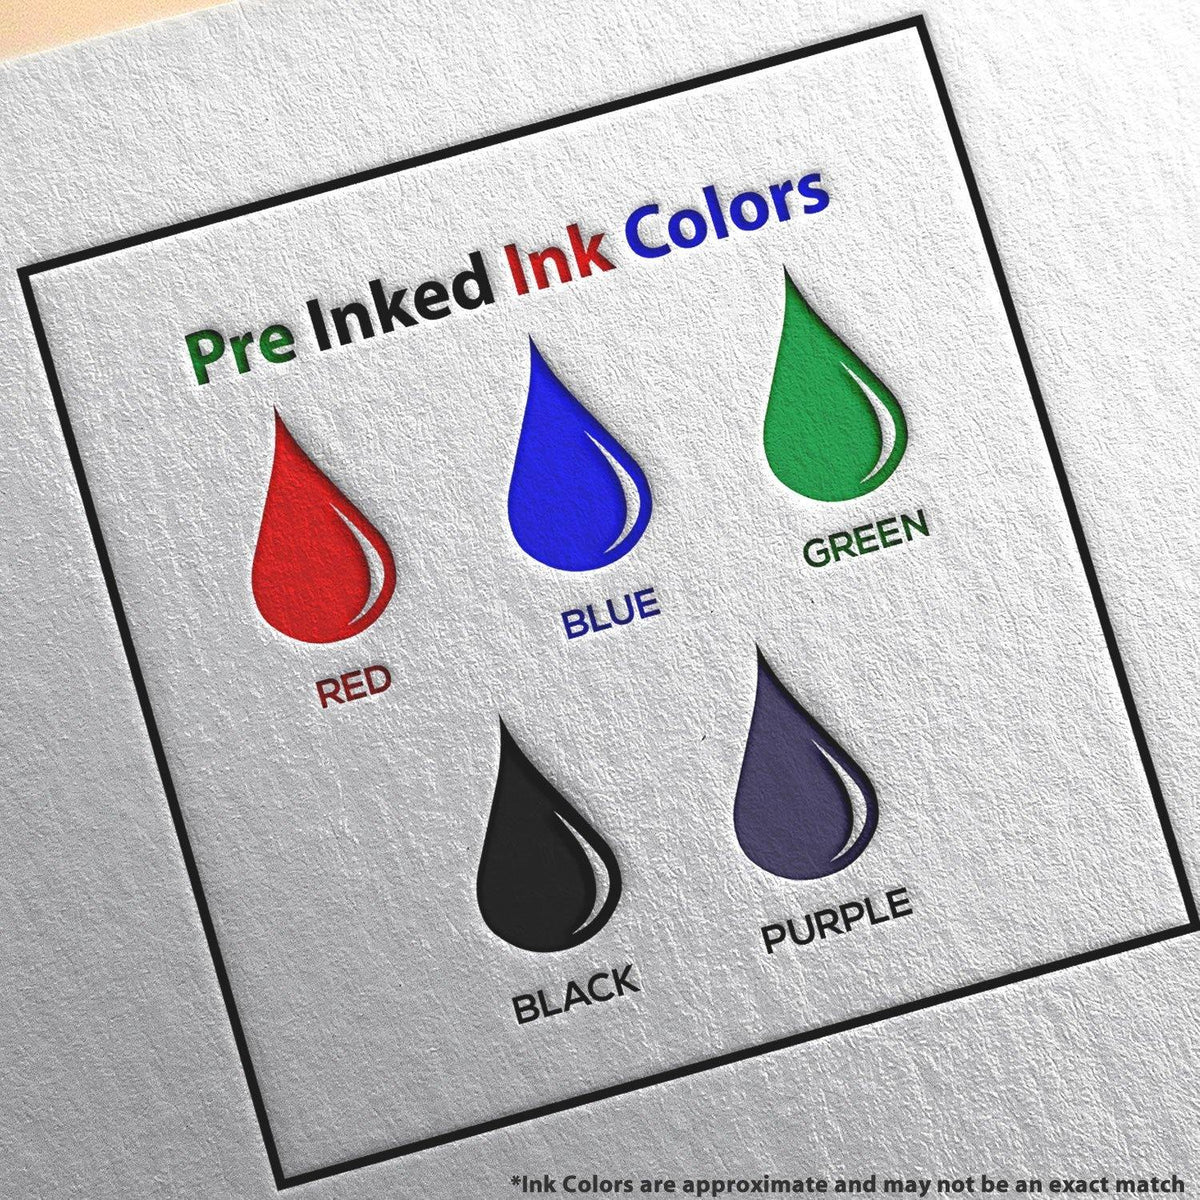 Slim Pre-Inked Printed Matter Stamp Ink Color Options